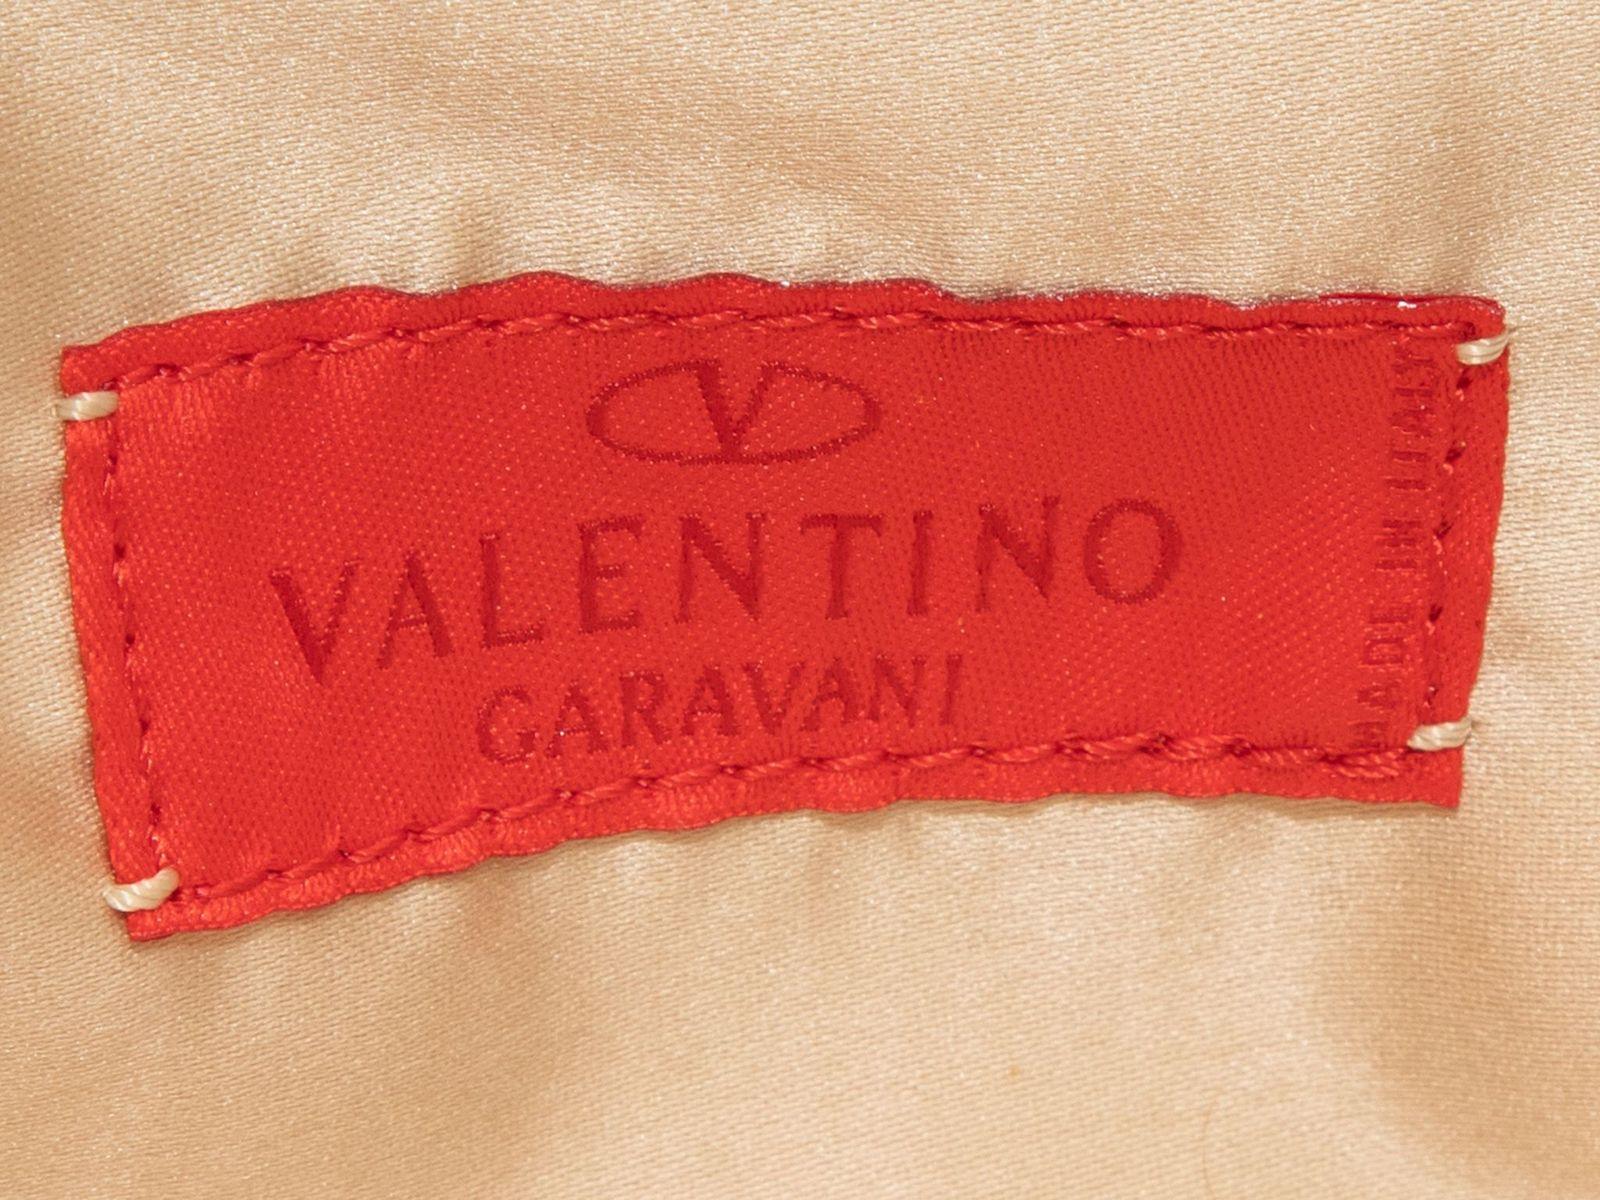 Product Details: Vintage Silver Valentino Rhinestone Handbag. This handbag features a rhinestone body, a single rhinestone top handle, and a top kiss-lock closure. 7